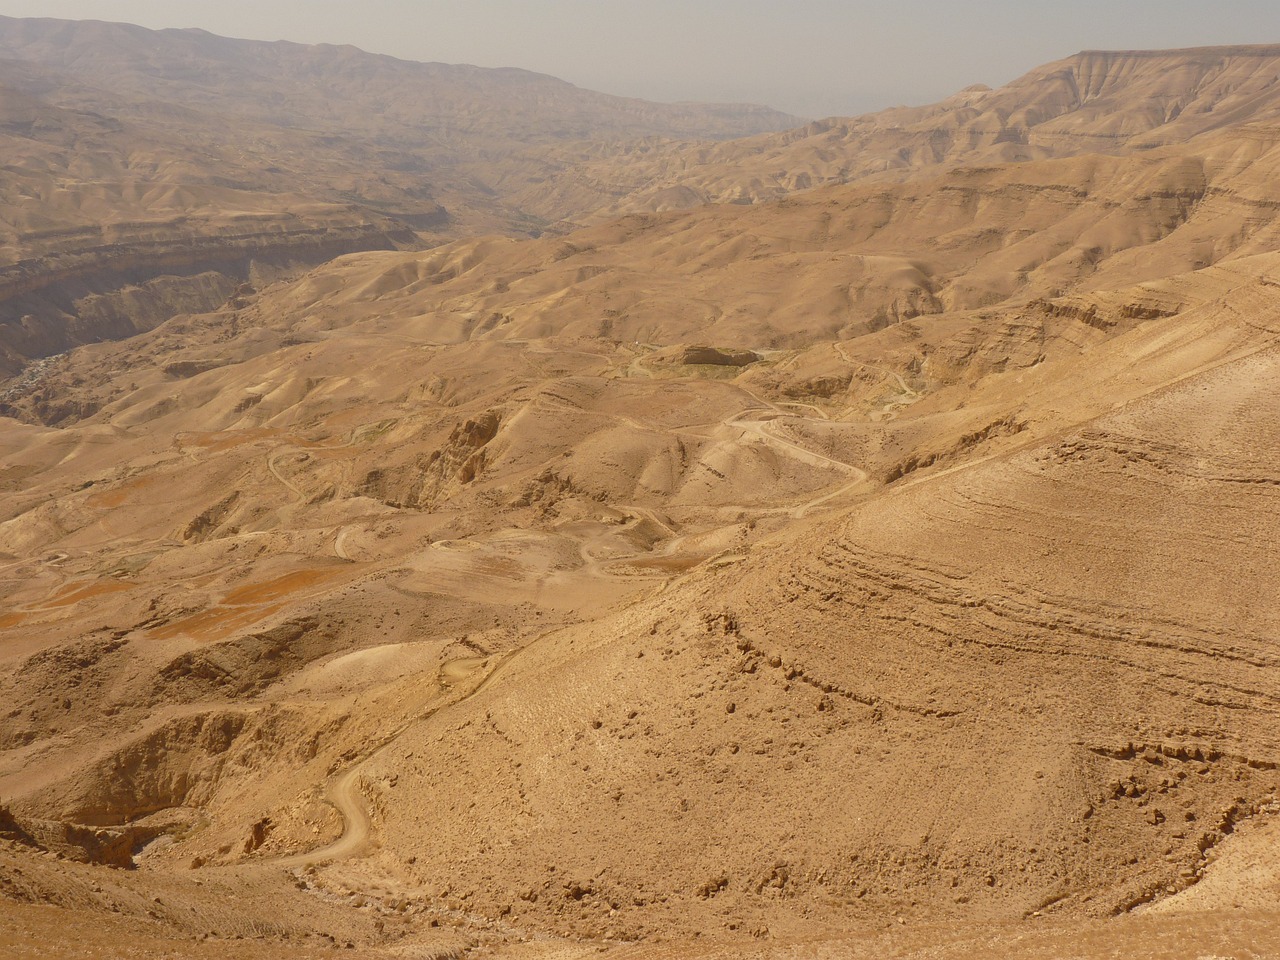 a person riding a horse in the desert, les nabis, expansive view, ancient biblical, benjamin vnuk, downhill landscape